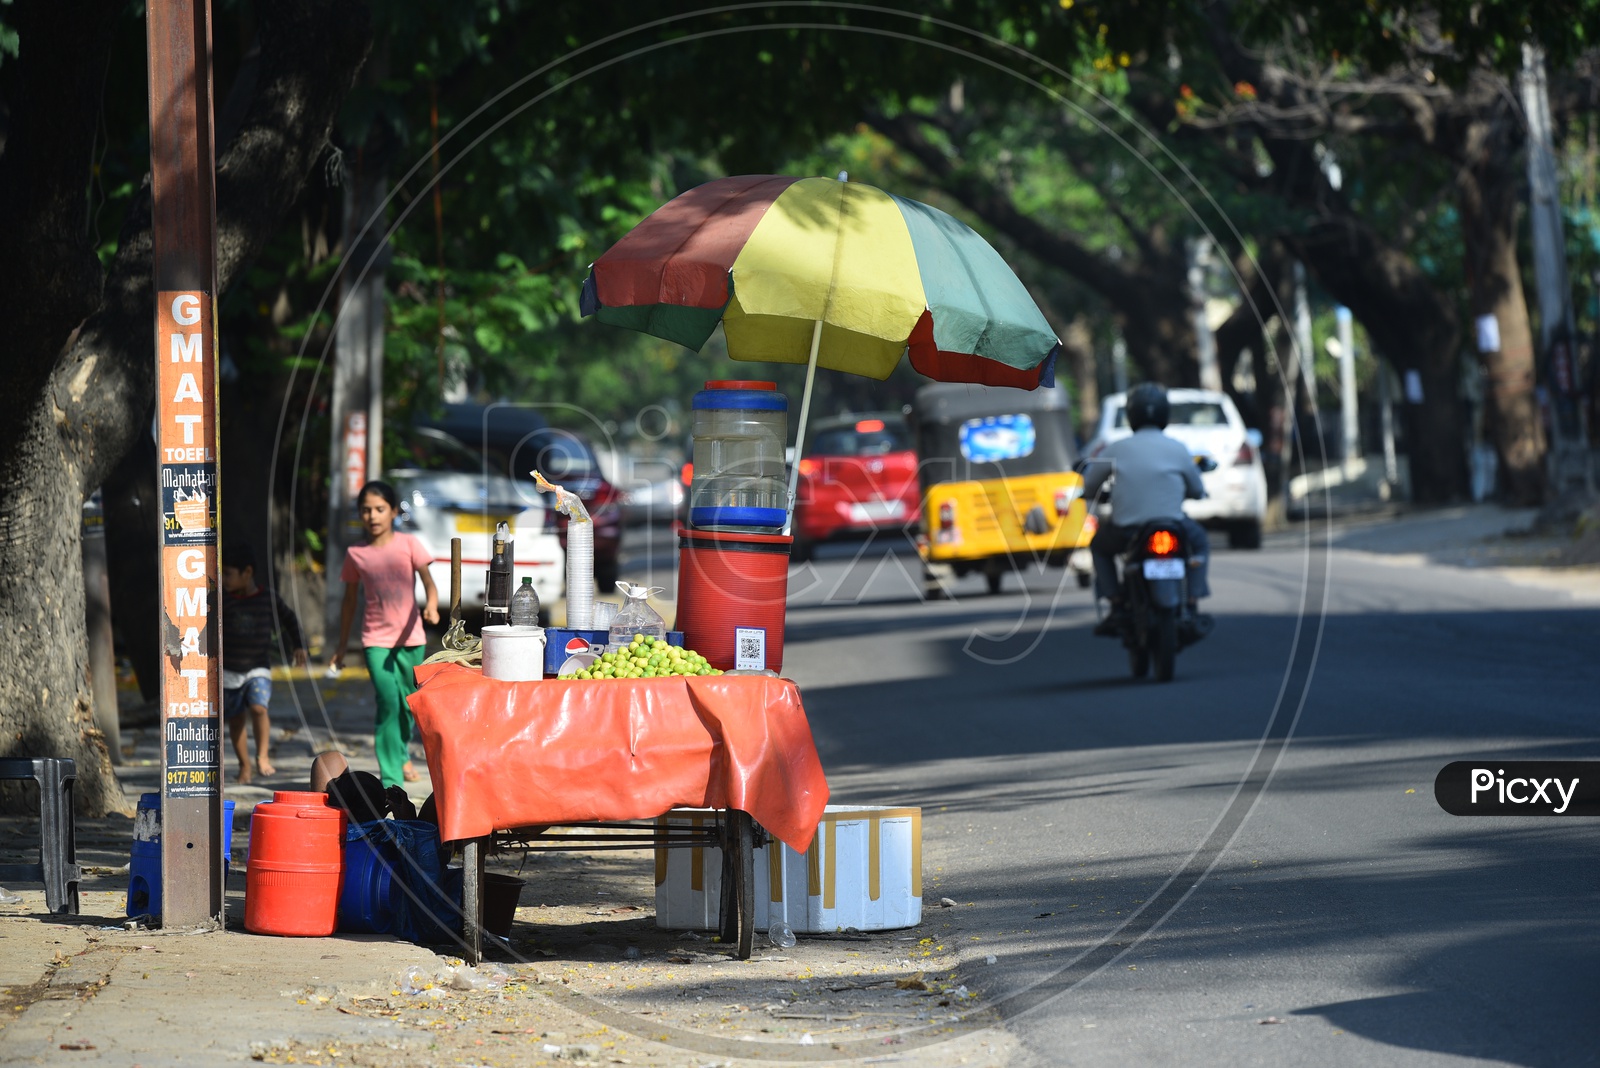 Lemon Soda Street Vendor Stalls To Beat Summer Heats